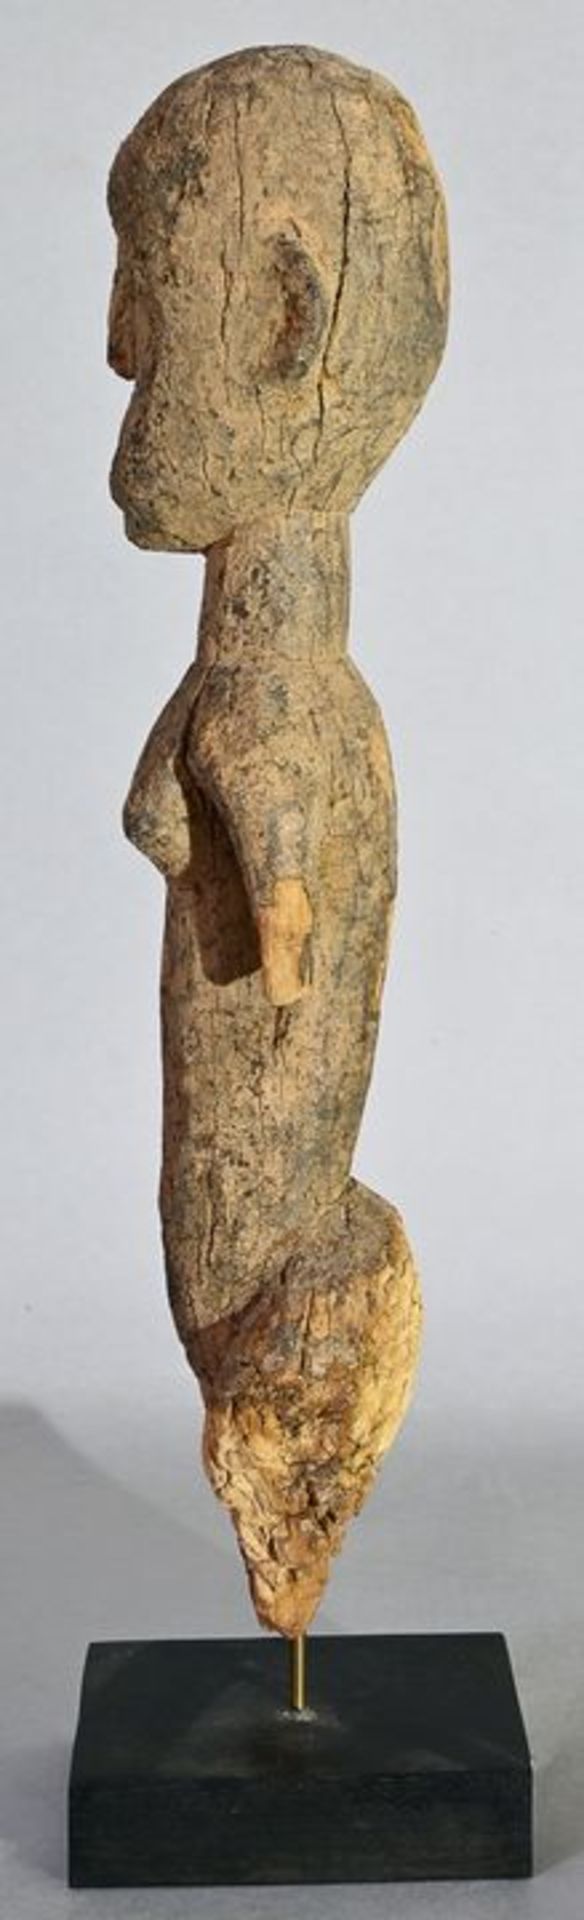 Lobi Statuette/ Lobi statue - Image 5 of 7